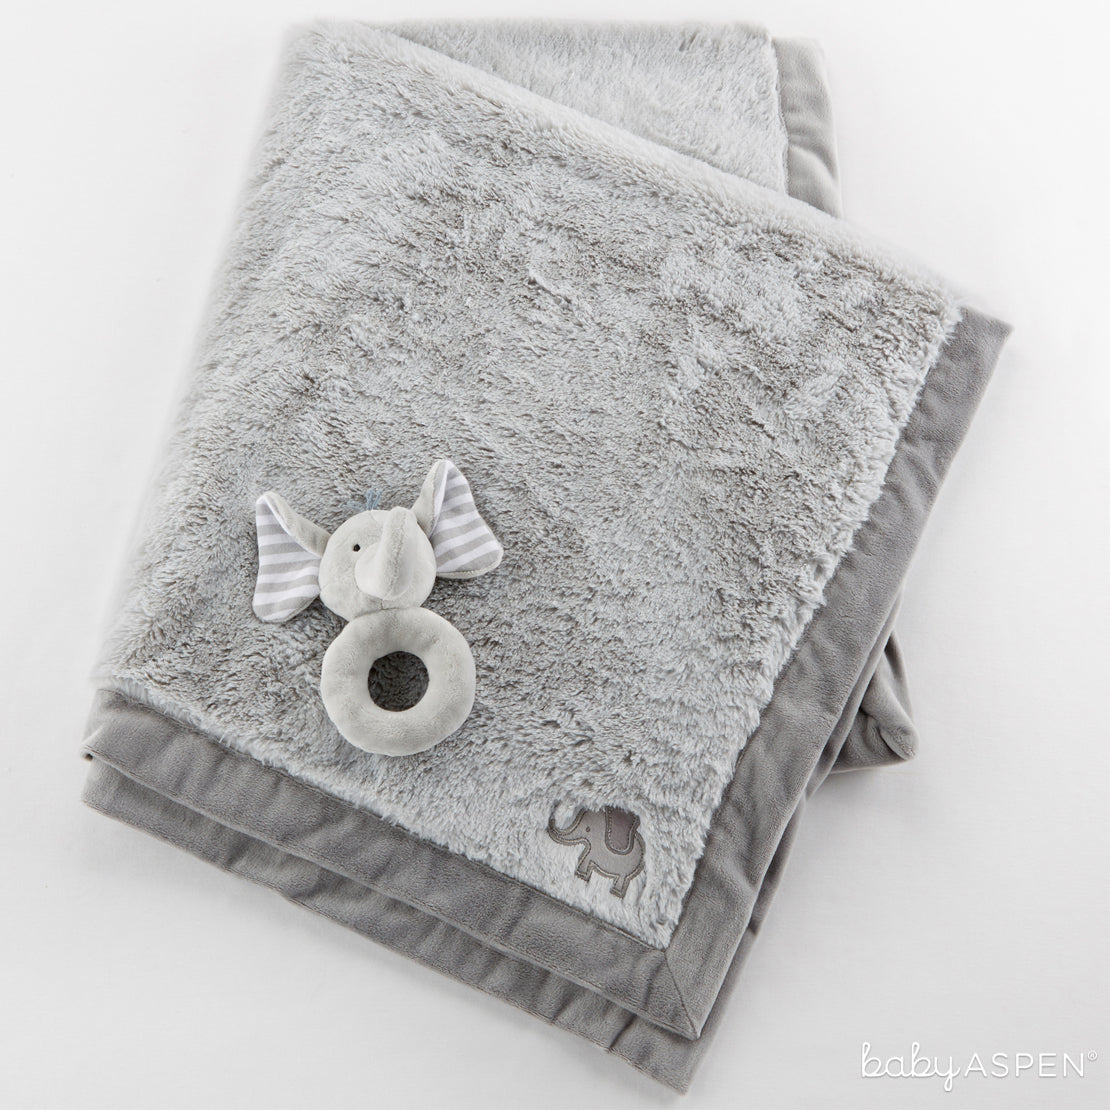 Elephant Blanket & Rattle Set | Sweet Elephant Themed Gifts For Your Little Peanut | Baby Aspen